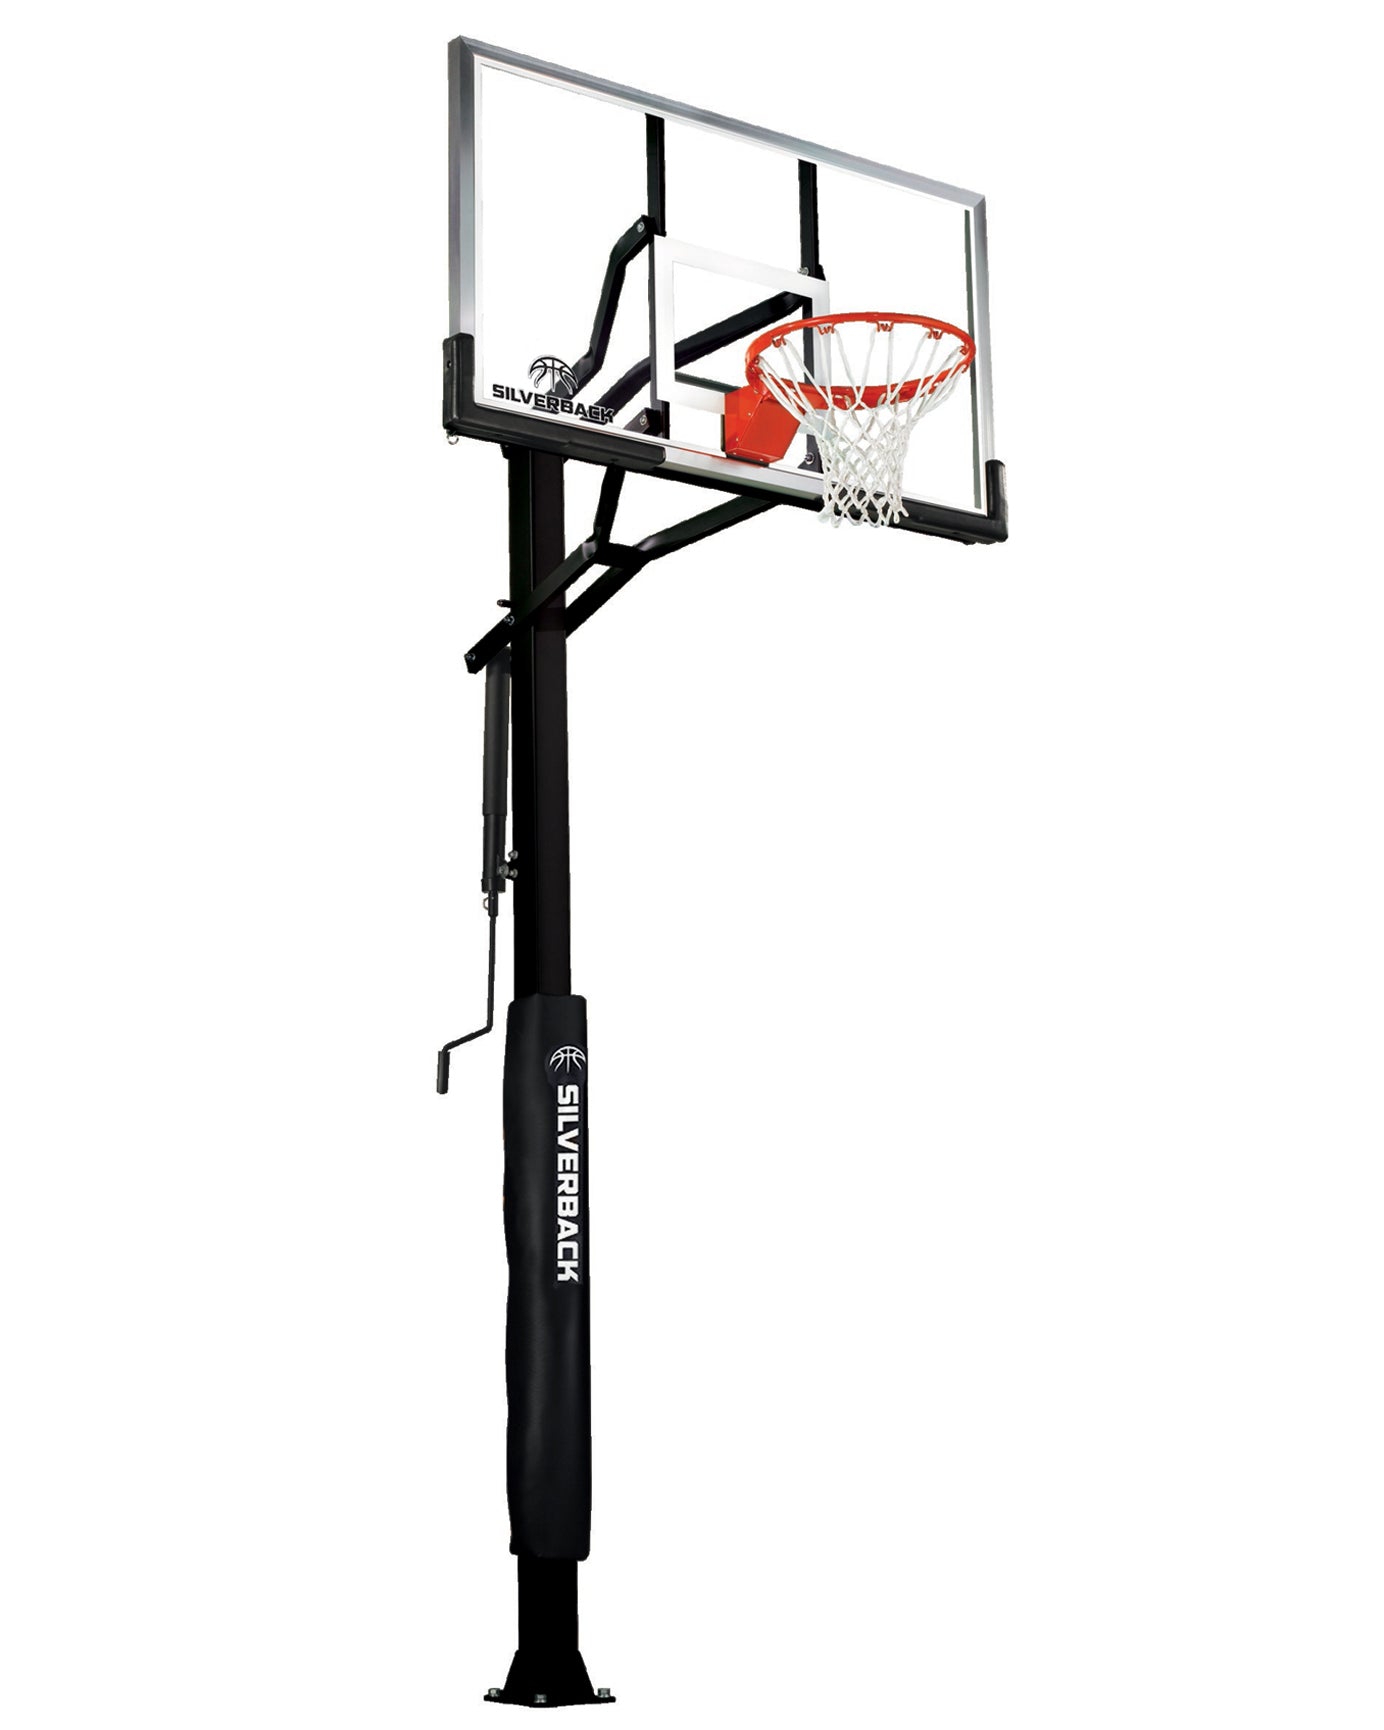 Goalrilla - Goaliath - Silverback - Basketball Hoops for Sale